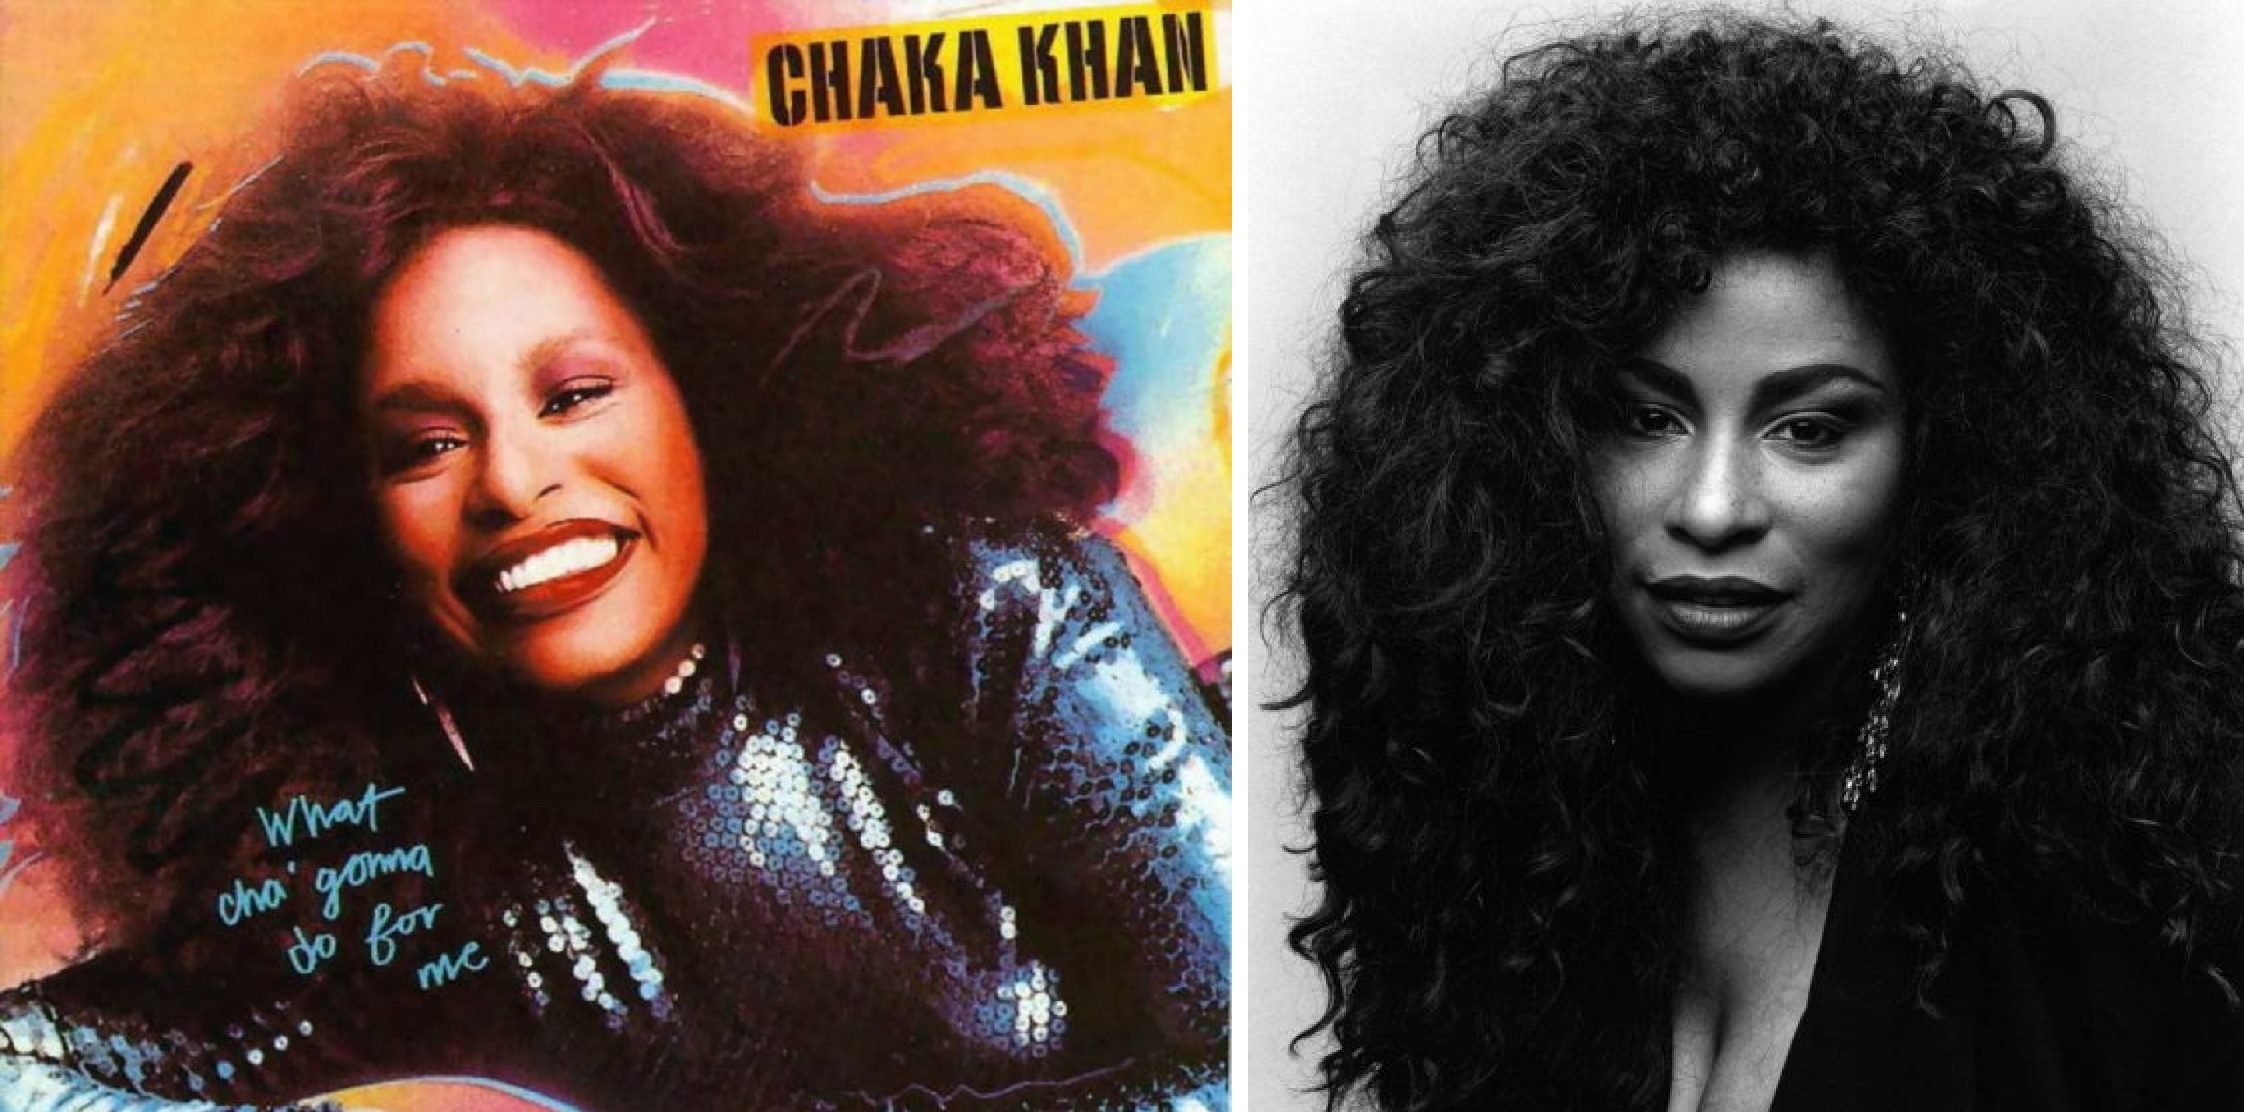 Top Ten Best Songs Of Chaka Khan – The Queen of Funk/Soul